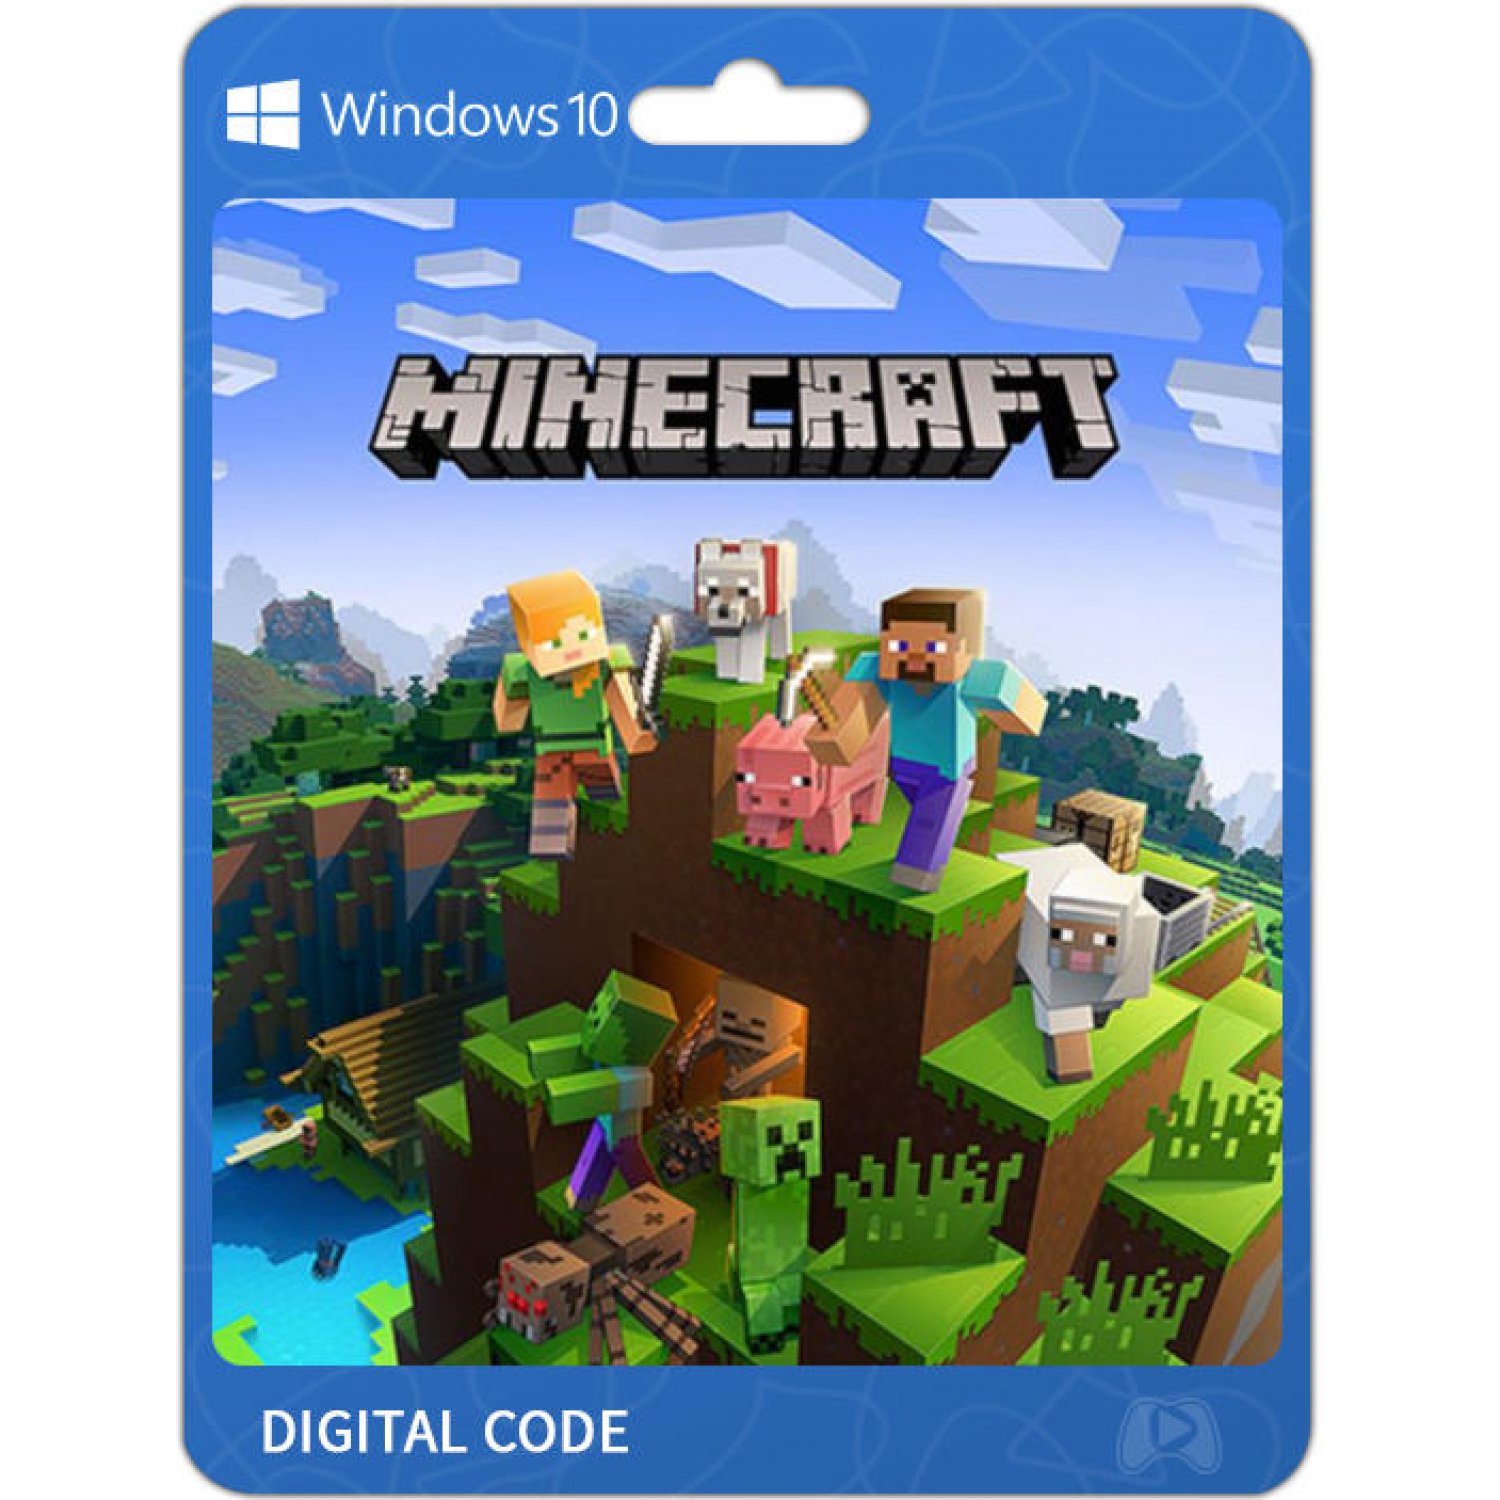 Minecraft Windows 10 Edition Windows 10 digital